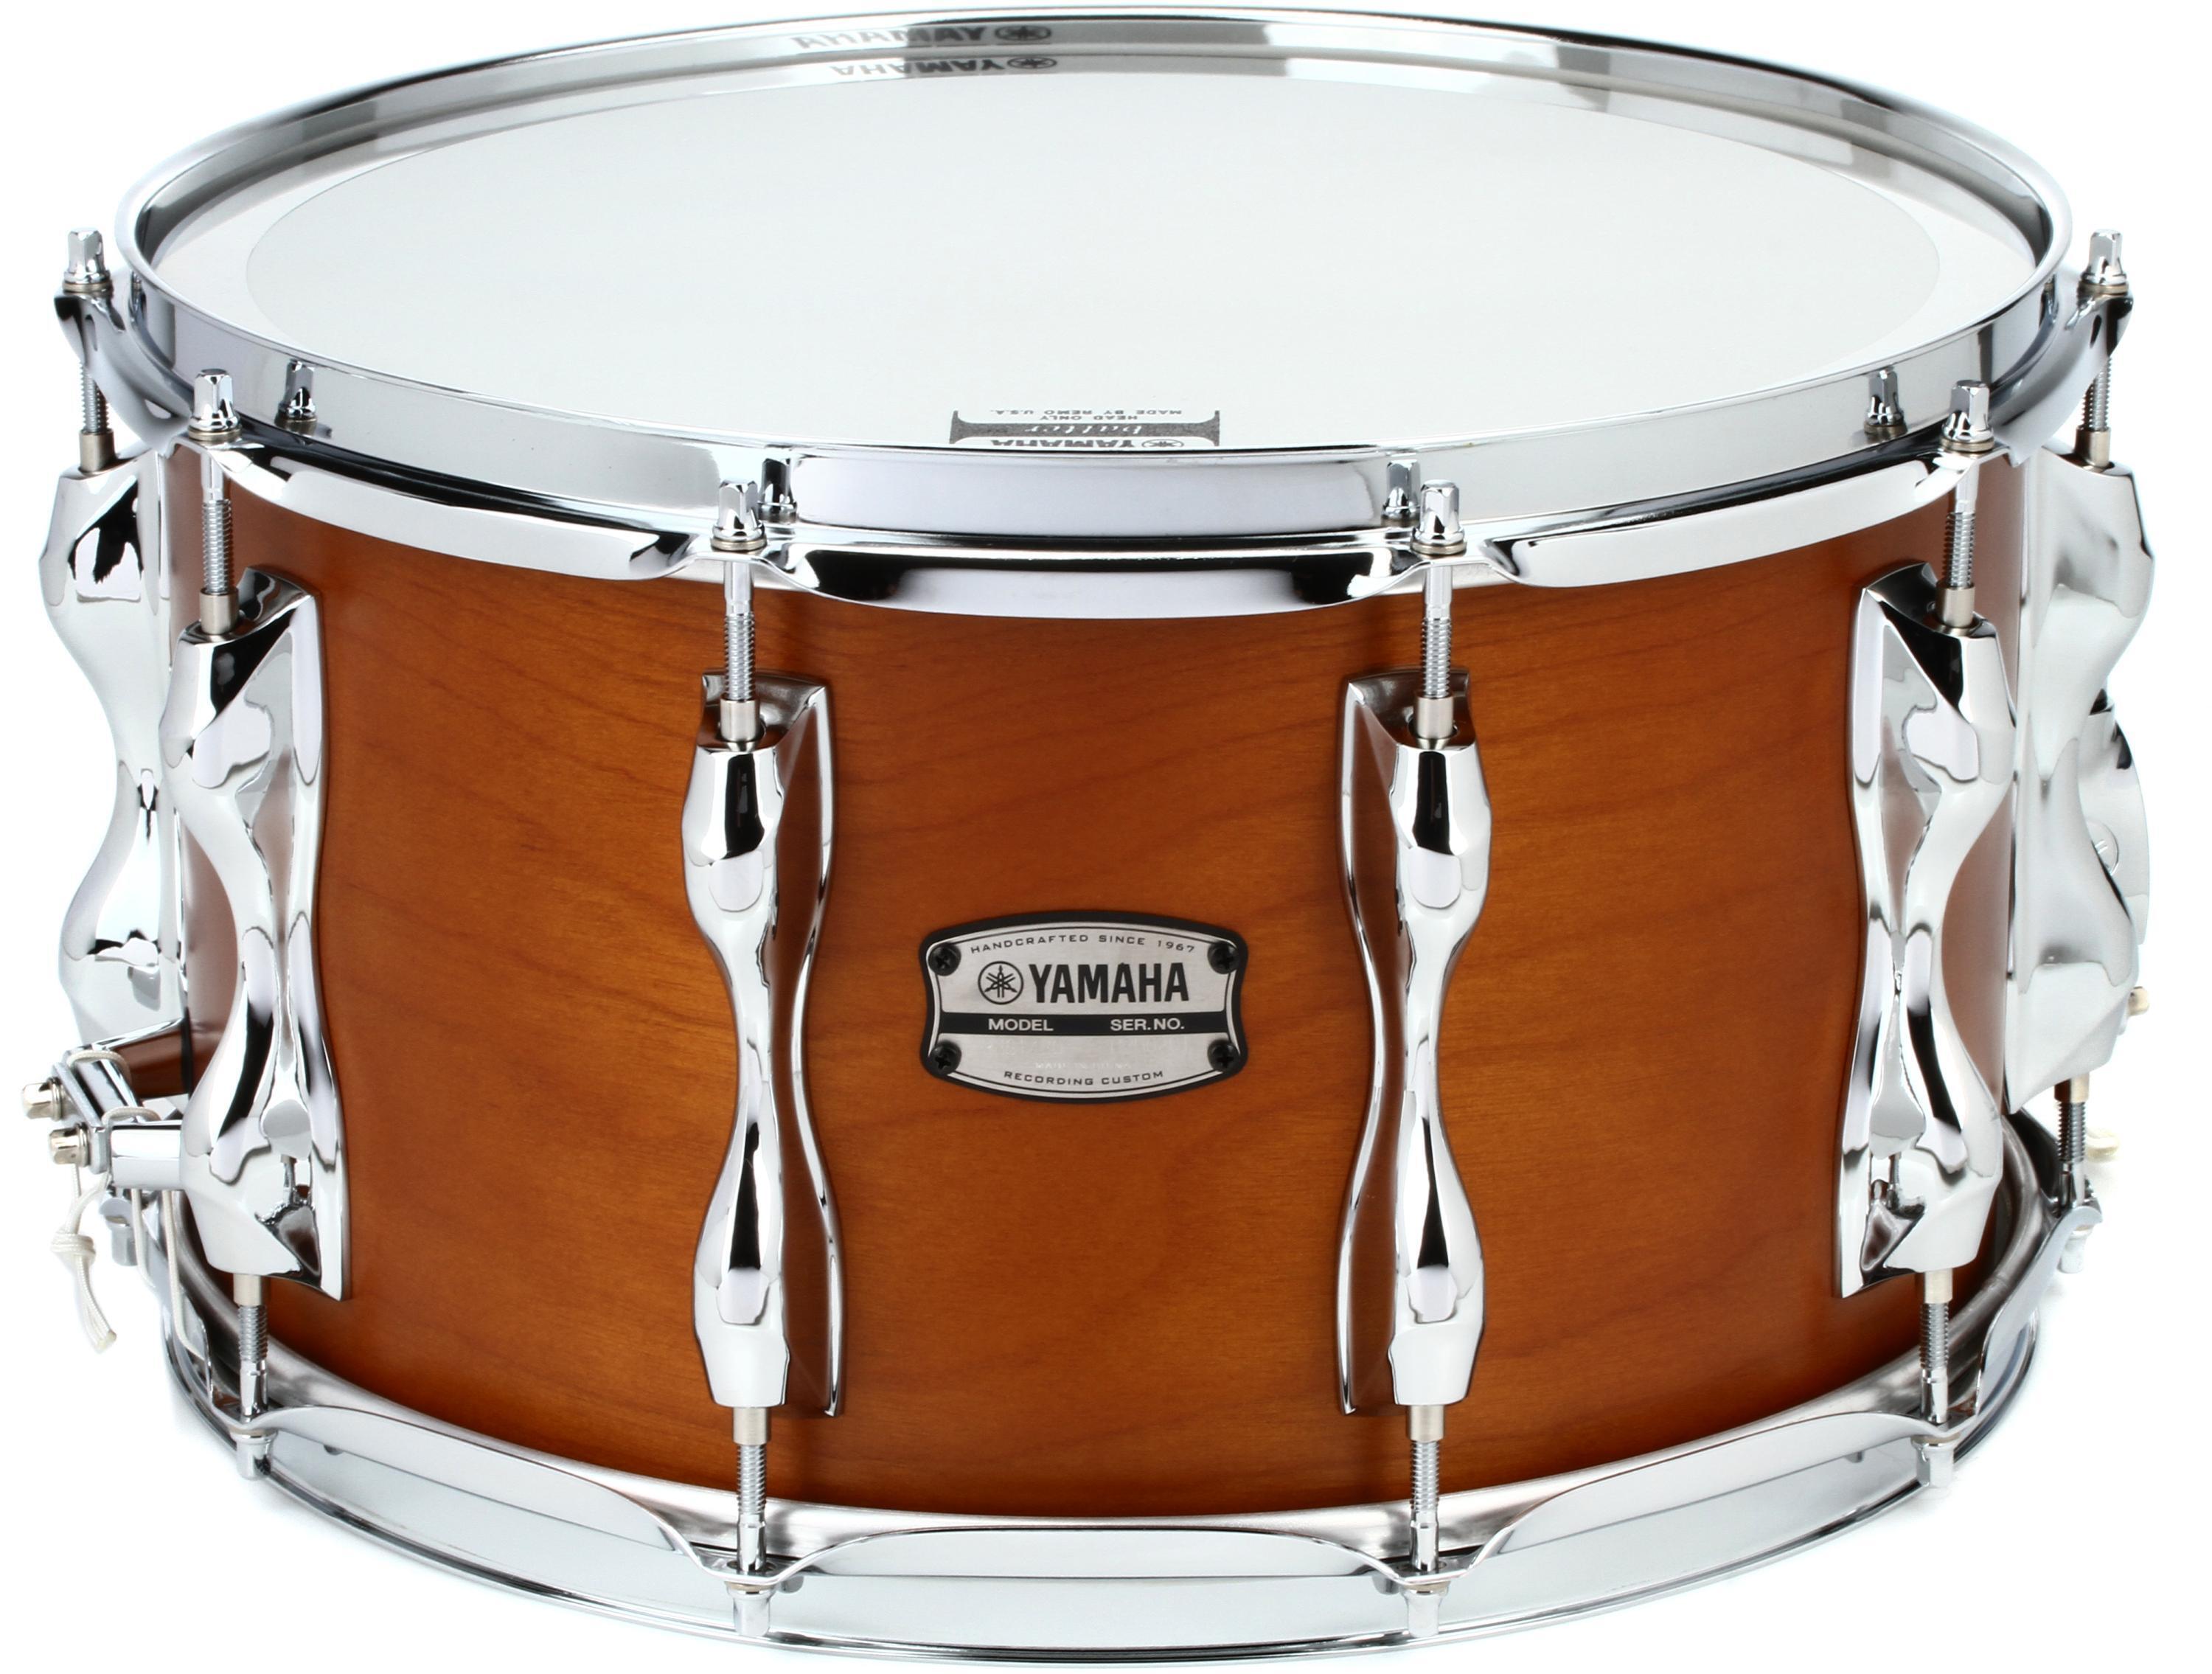 Yamaha Recording Custom Snare Drum - 8 x 14 inch - Real Wood